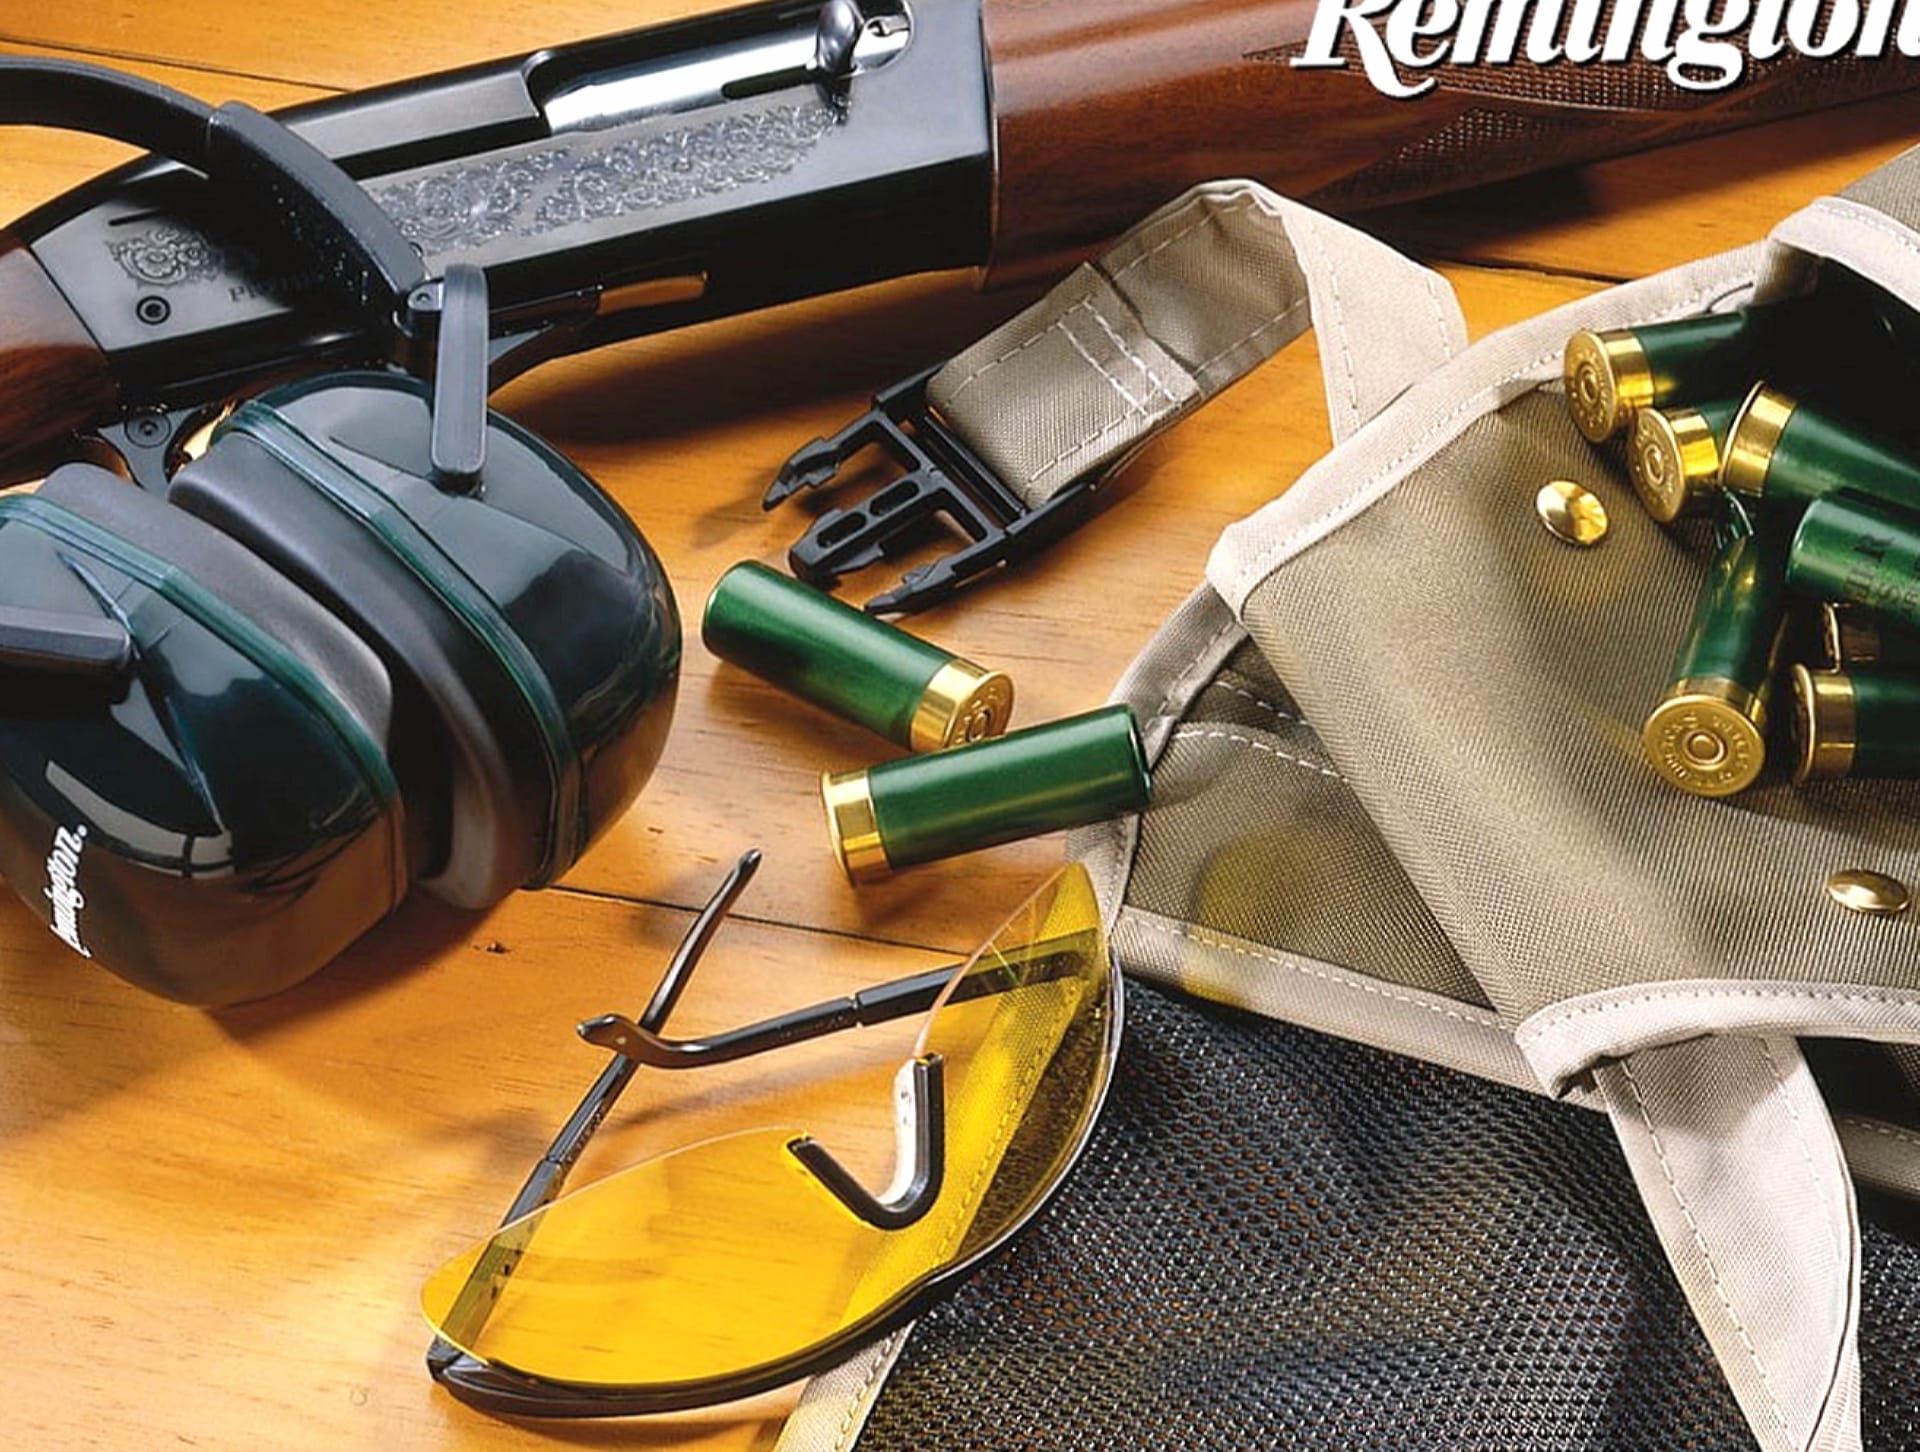 Remington Shotgun at 640 x 1136 iPhone 5 size wallpapers HD quality